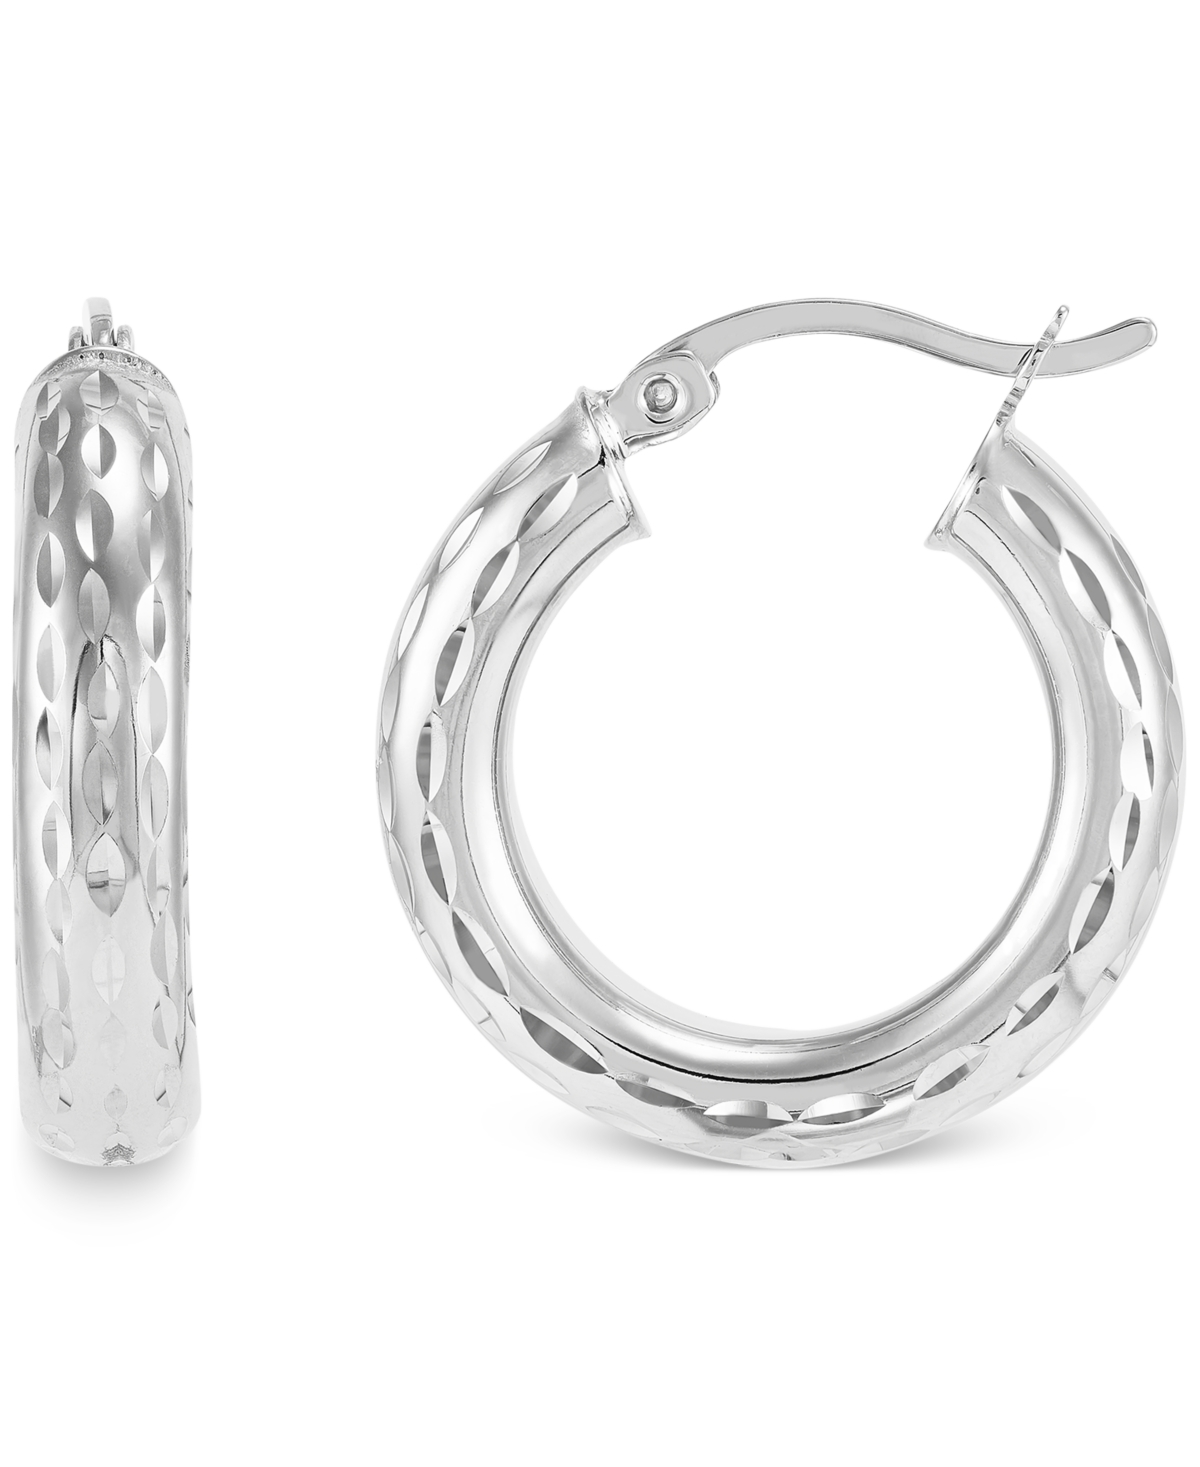 Giani Bernini Textured Tube Small Hoop Earrings, 20mm, Created For Macy's In Silver